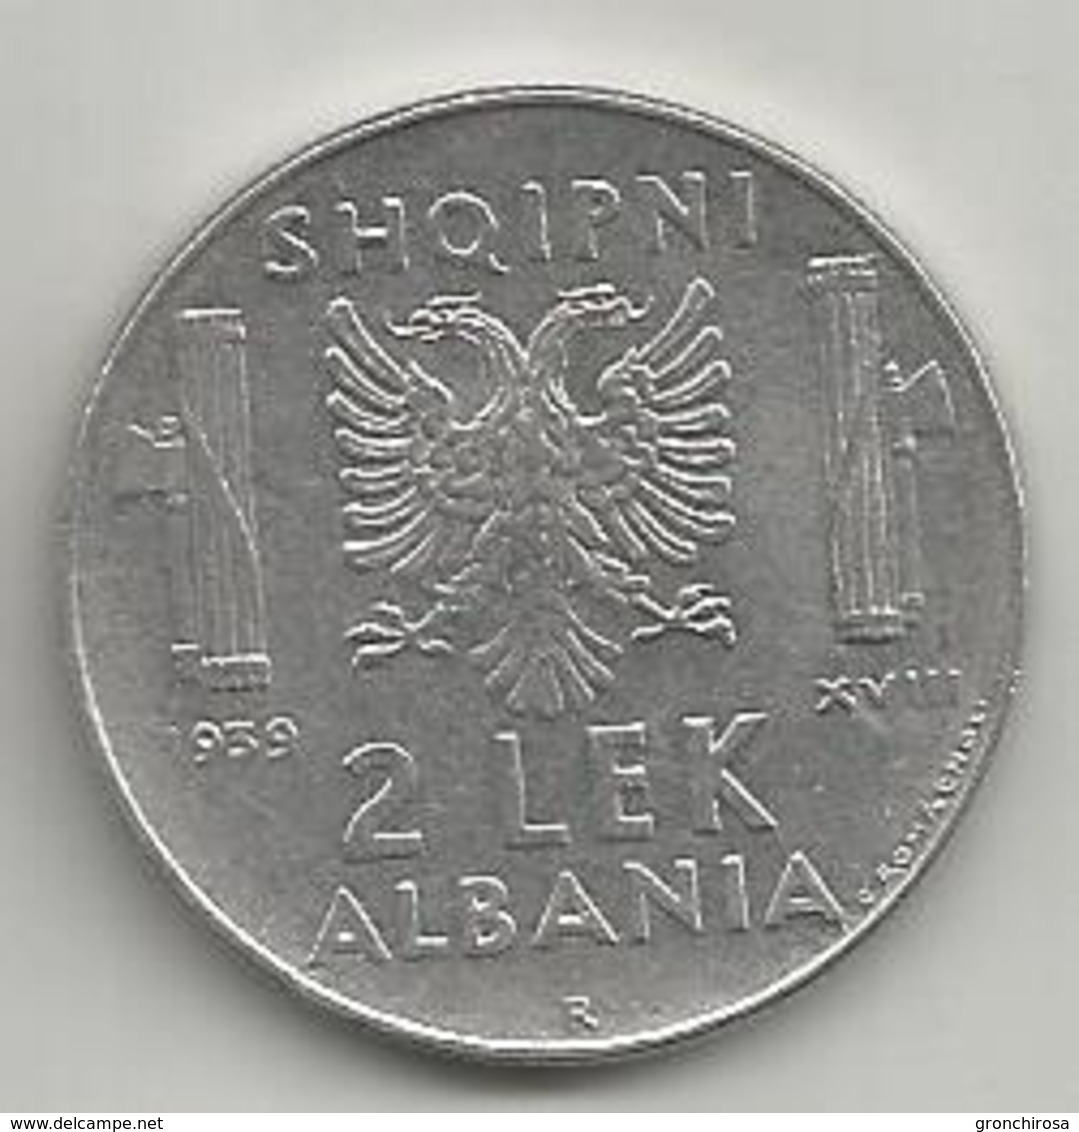 Albania Italiana, 1939a, 2 Lek, Vittorio Emanuele. ANTIMAGNETICA. - Albanie